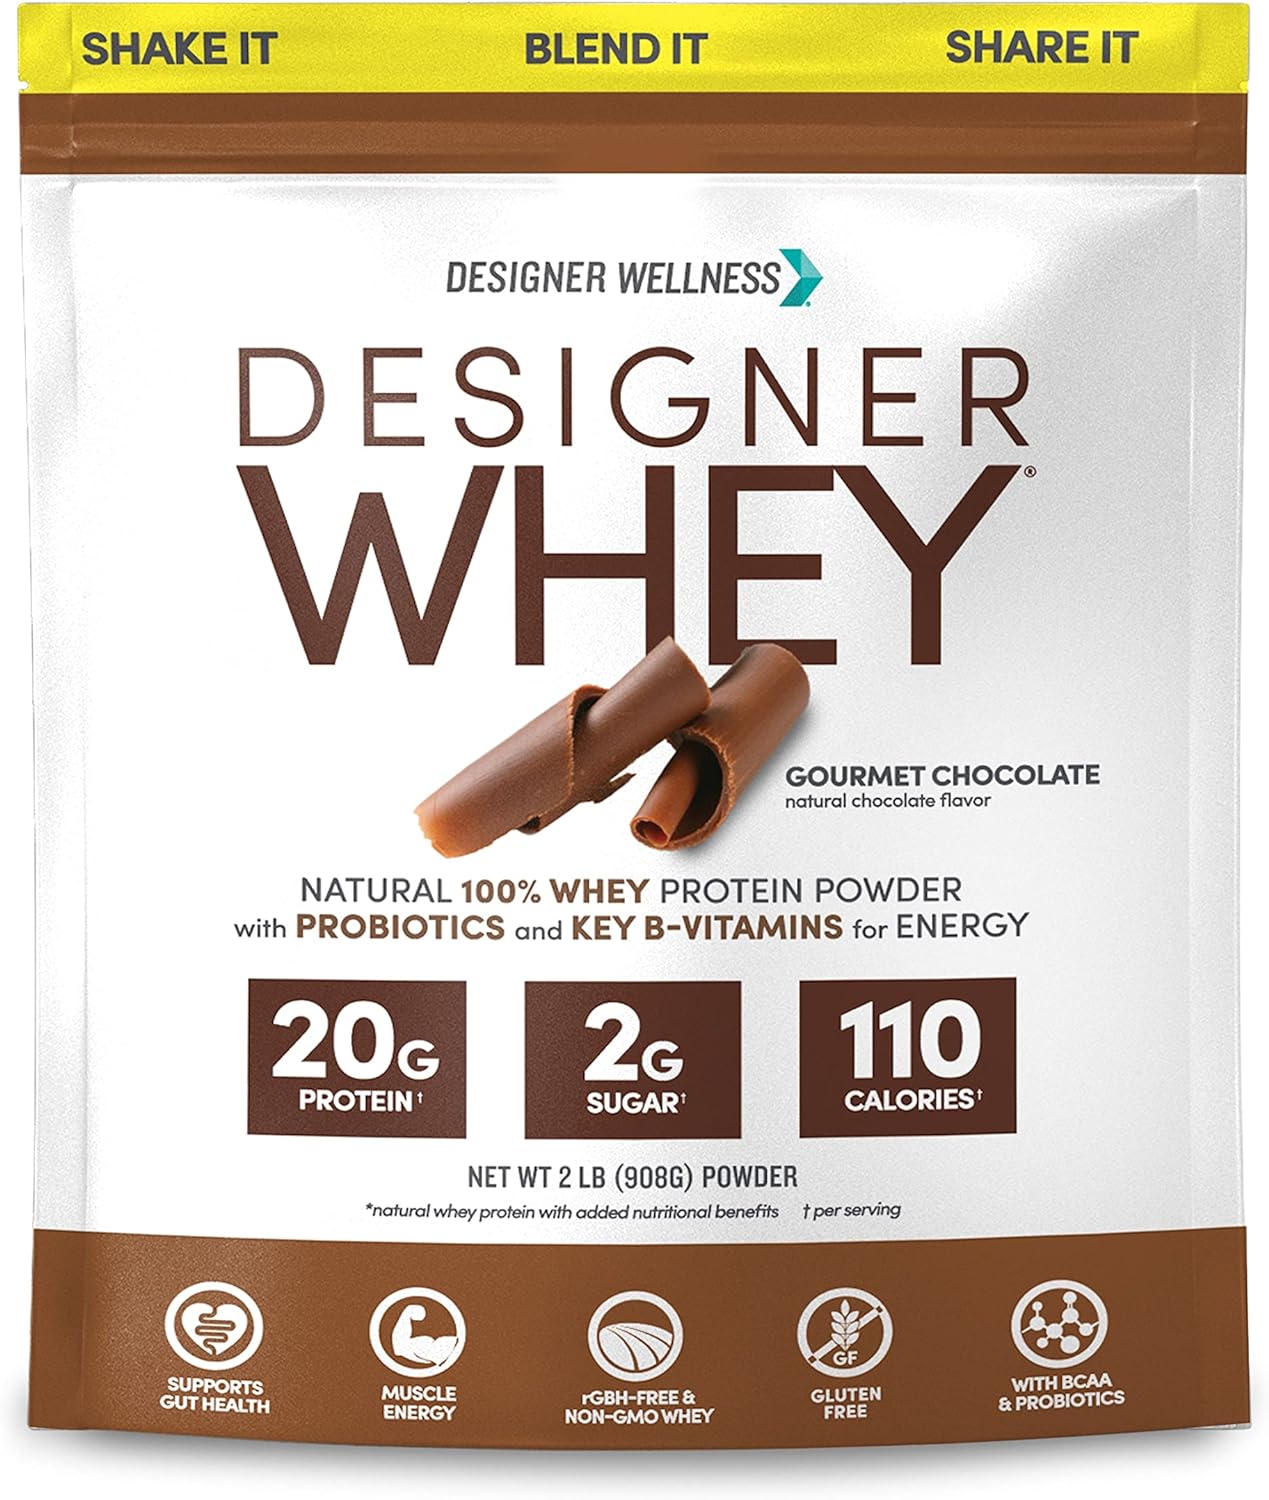 Designer Wellness, Designer Whey, Natural Whey Protein Powder with Probiotics, Fiber, and Key B-Vitamins for Energy, Gluten-Free, Gourmet Chocolate, 2 lb